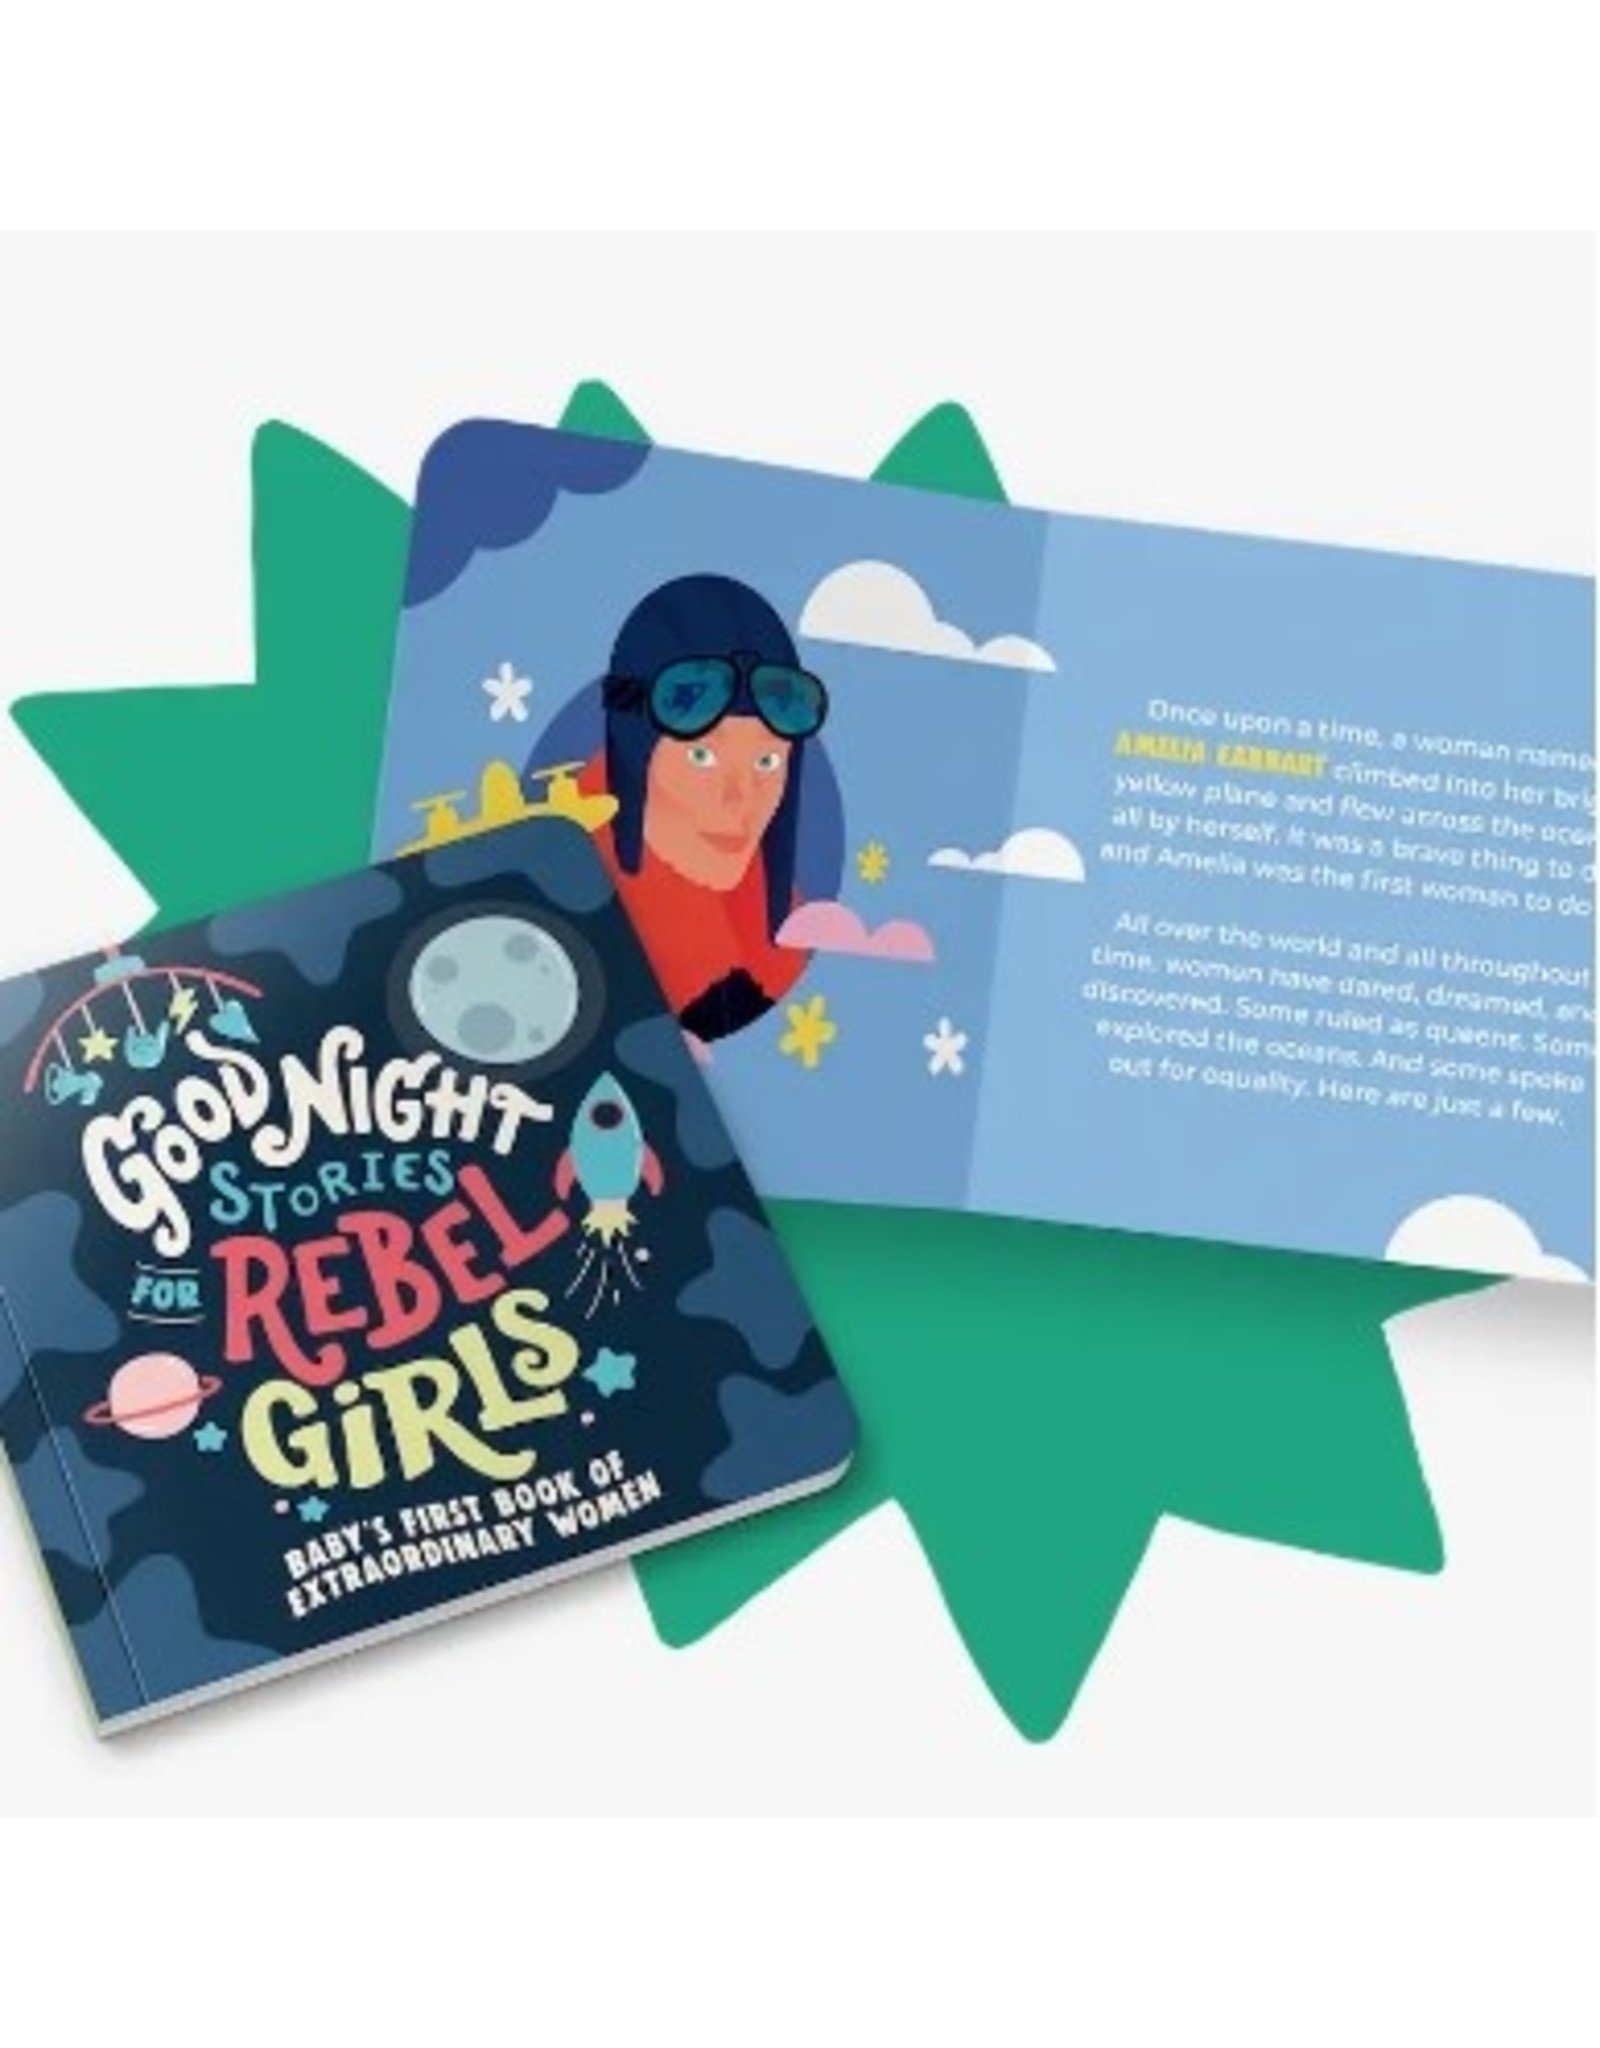 Rebel Girls: Baby's First Book of Extraordinary Women